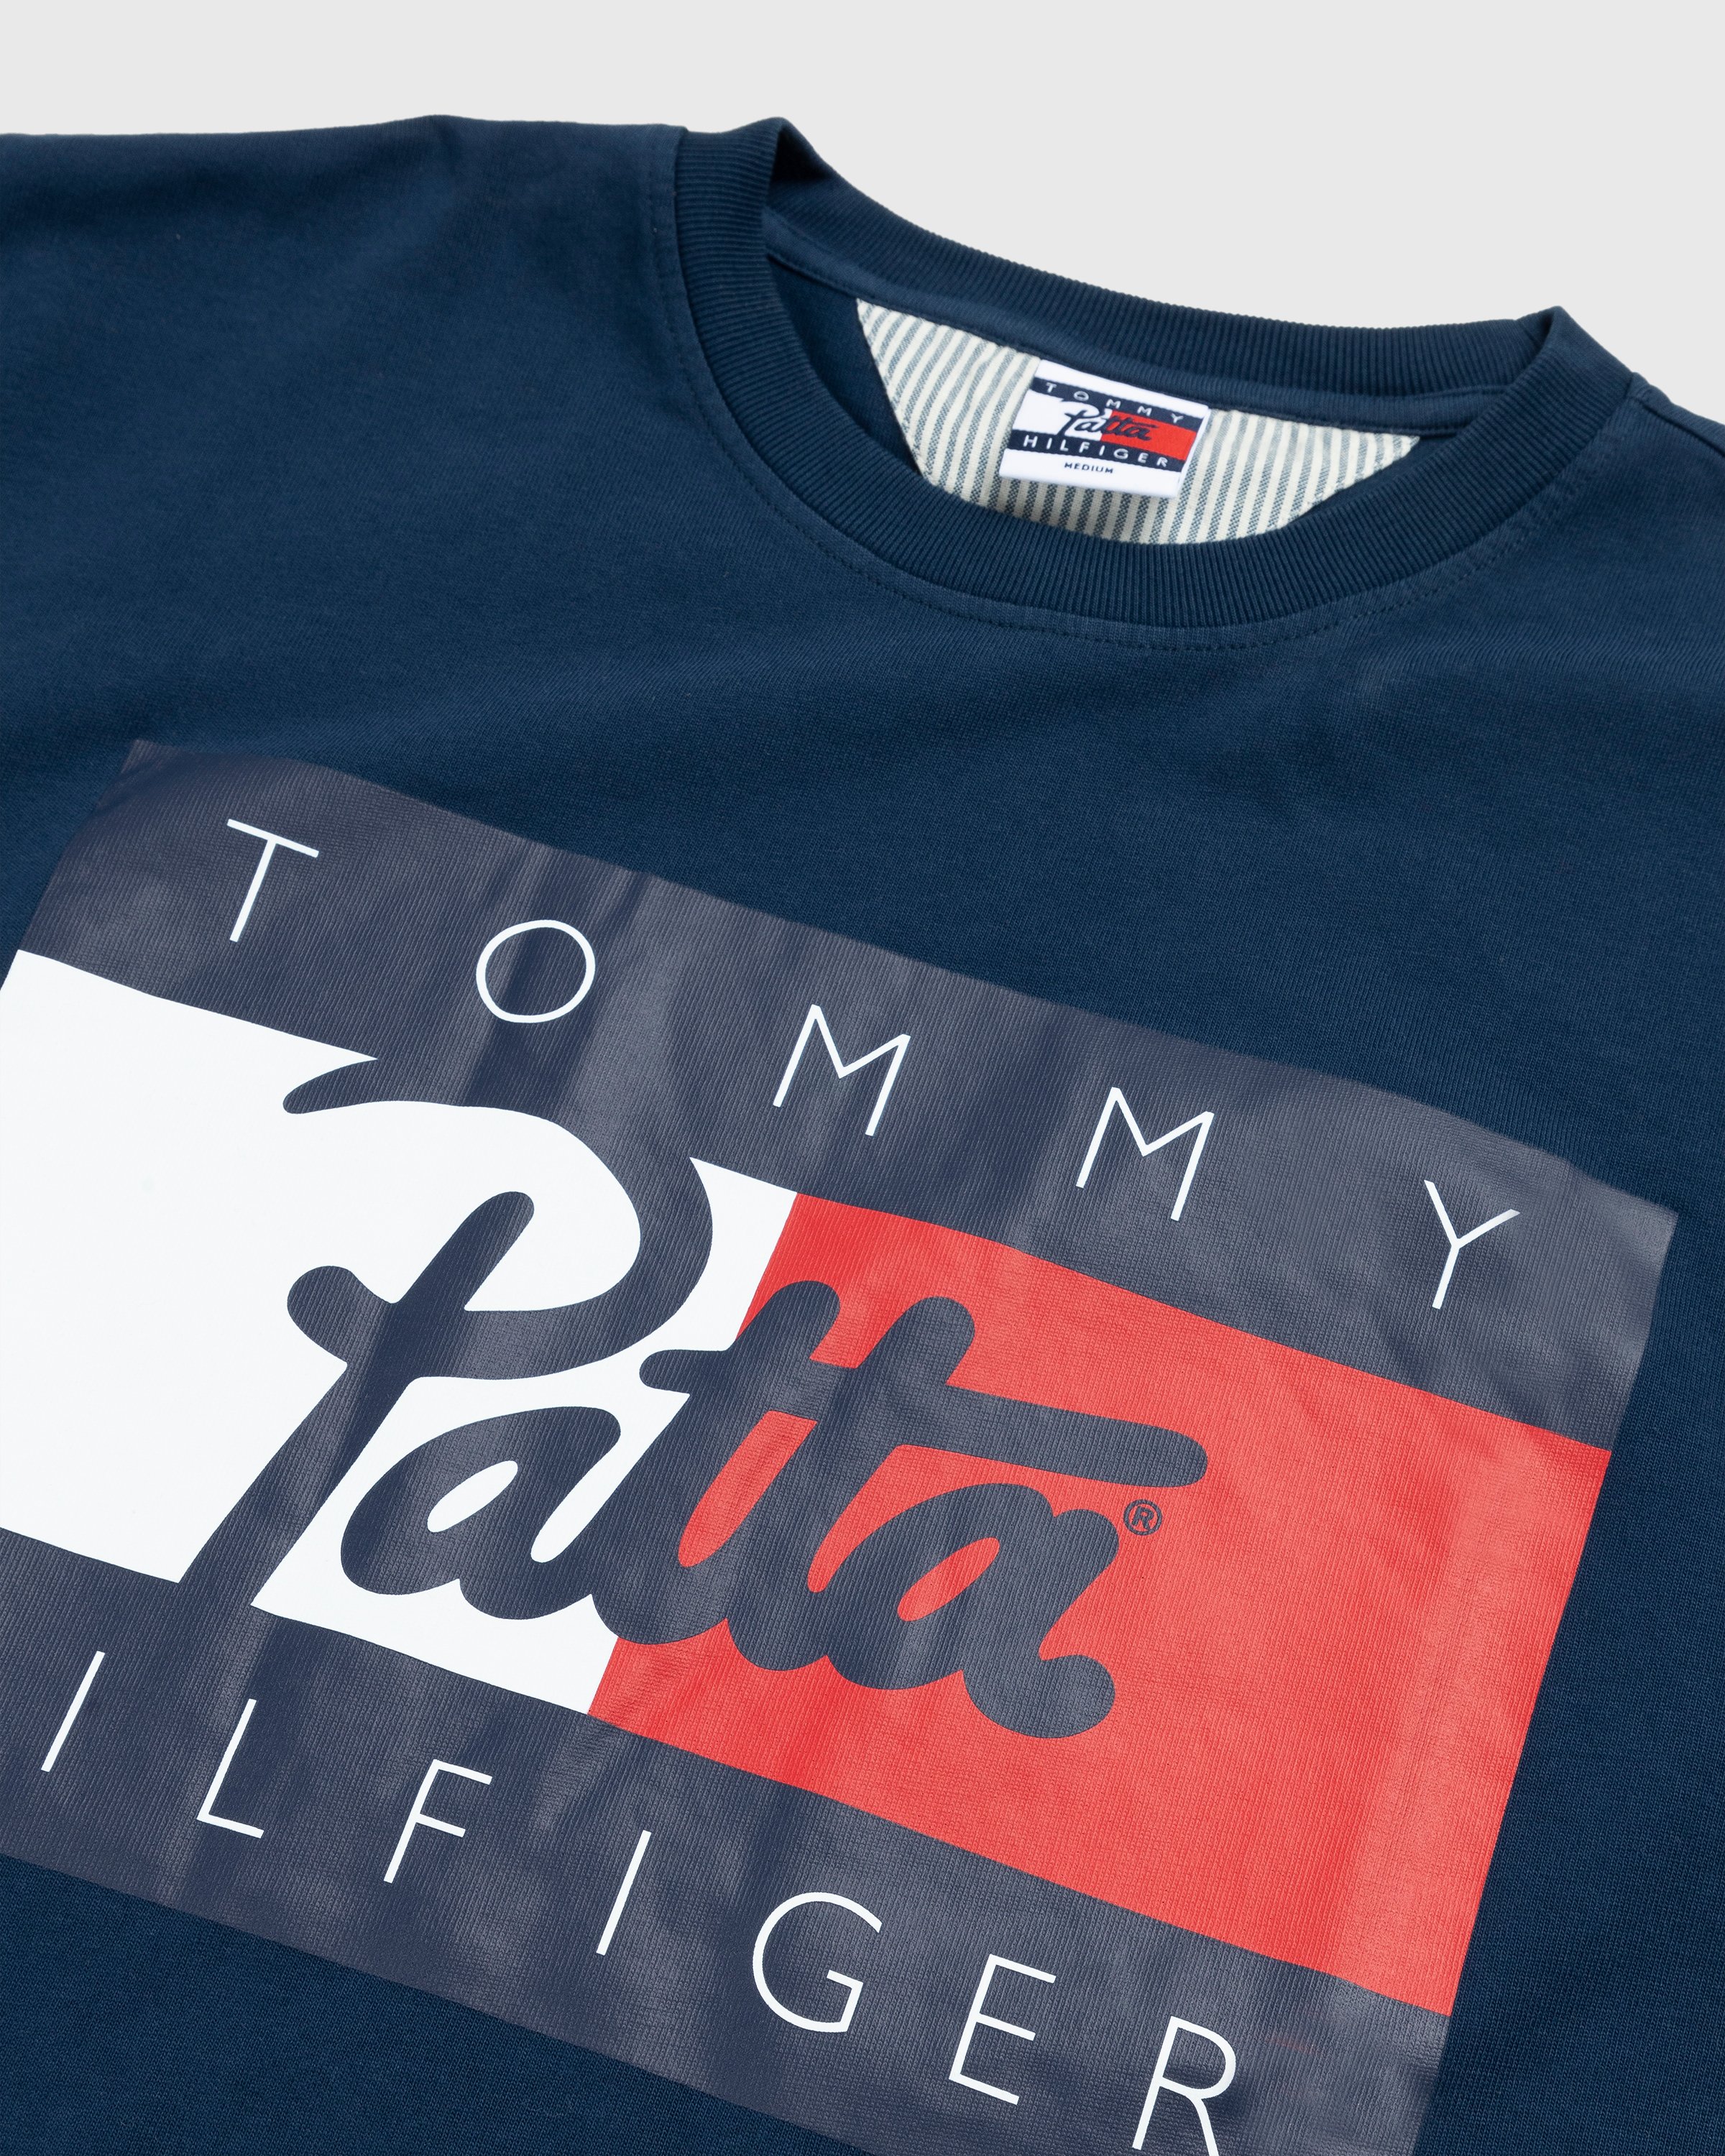 Patta x Tommy Hilfiger - T-Shirt Sport Navy - Clothing - Blue - Image 3